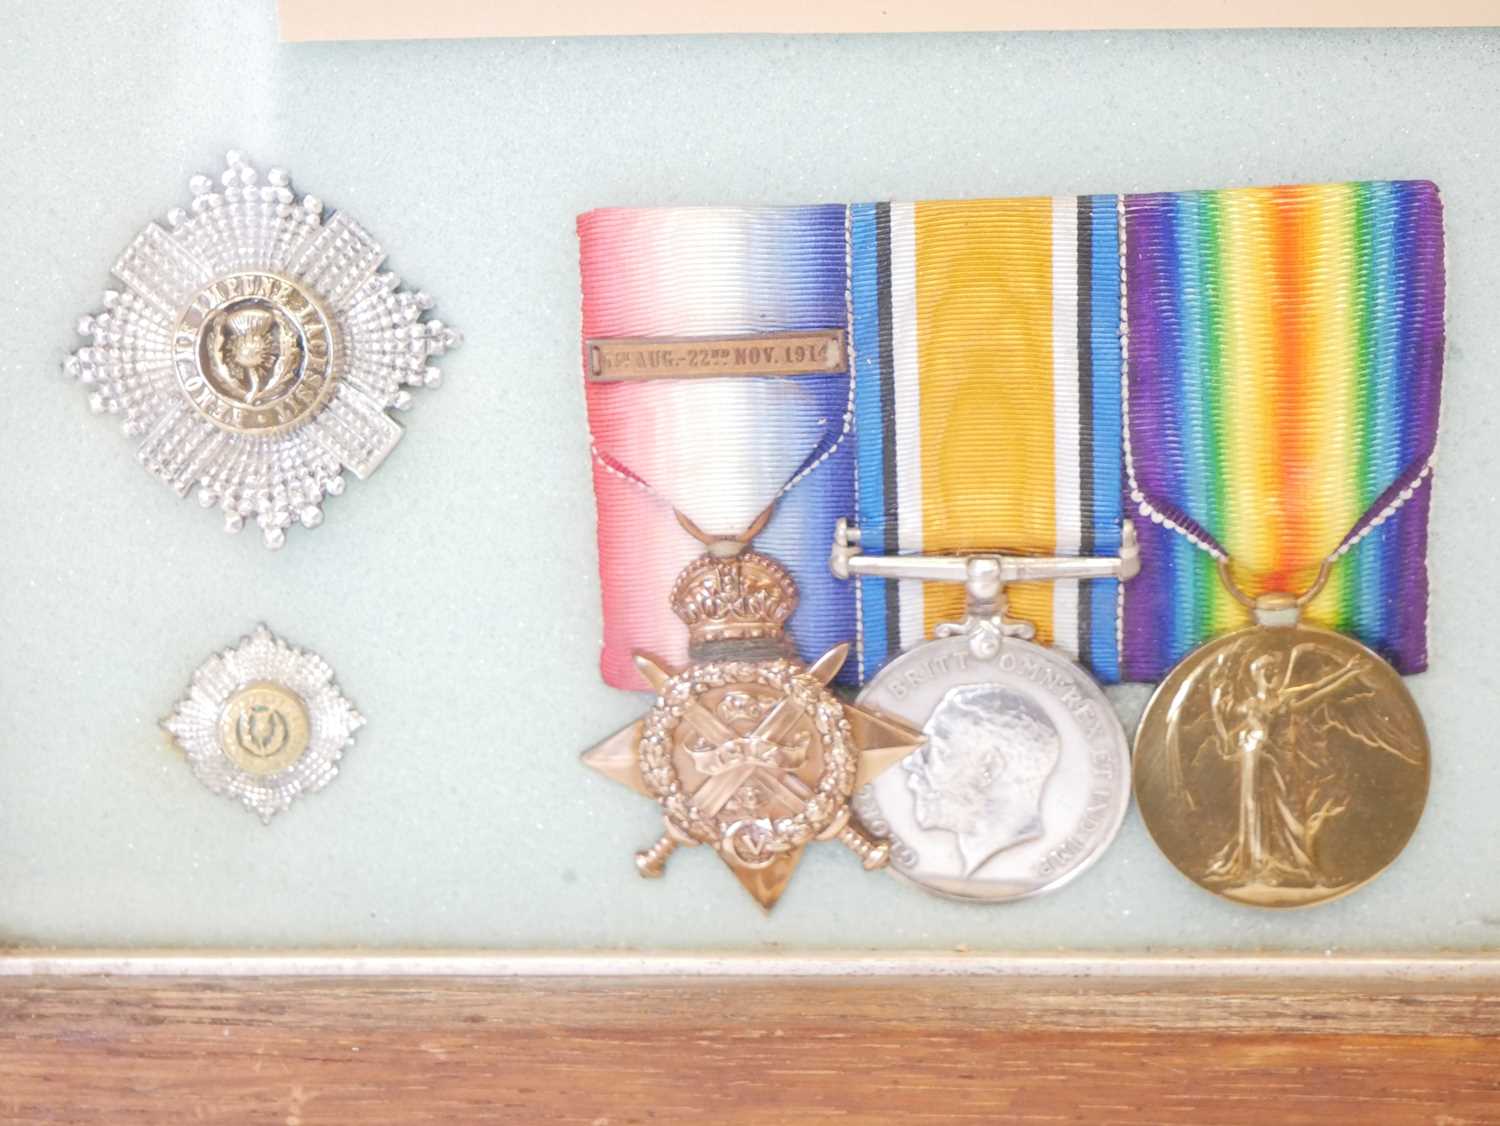 Framed photograph & WWI medals awarded to H.H. Liddell-Granger - Image 3 of 9